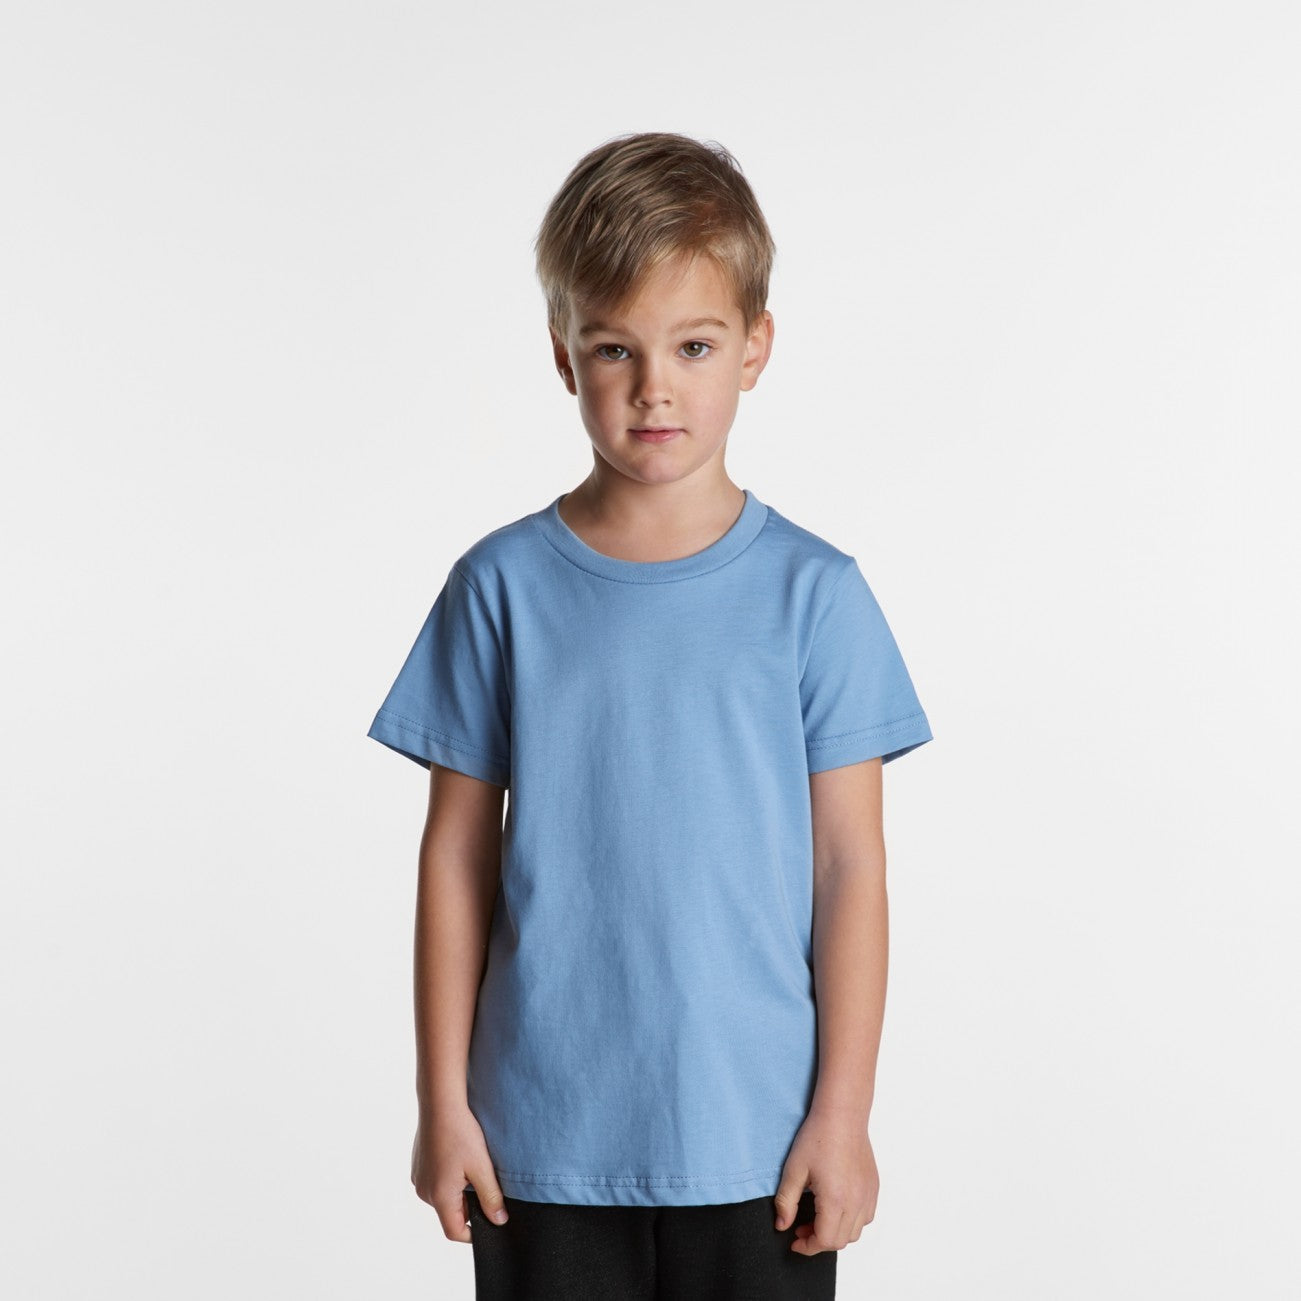 Kids Custom Printed T-Shirt - Dead Set Threads